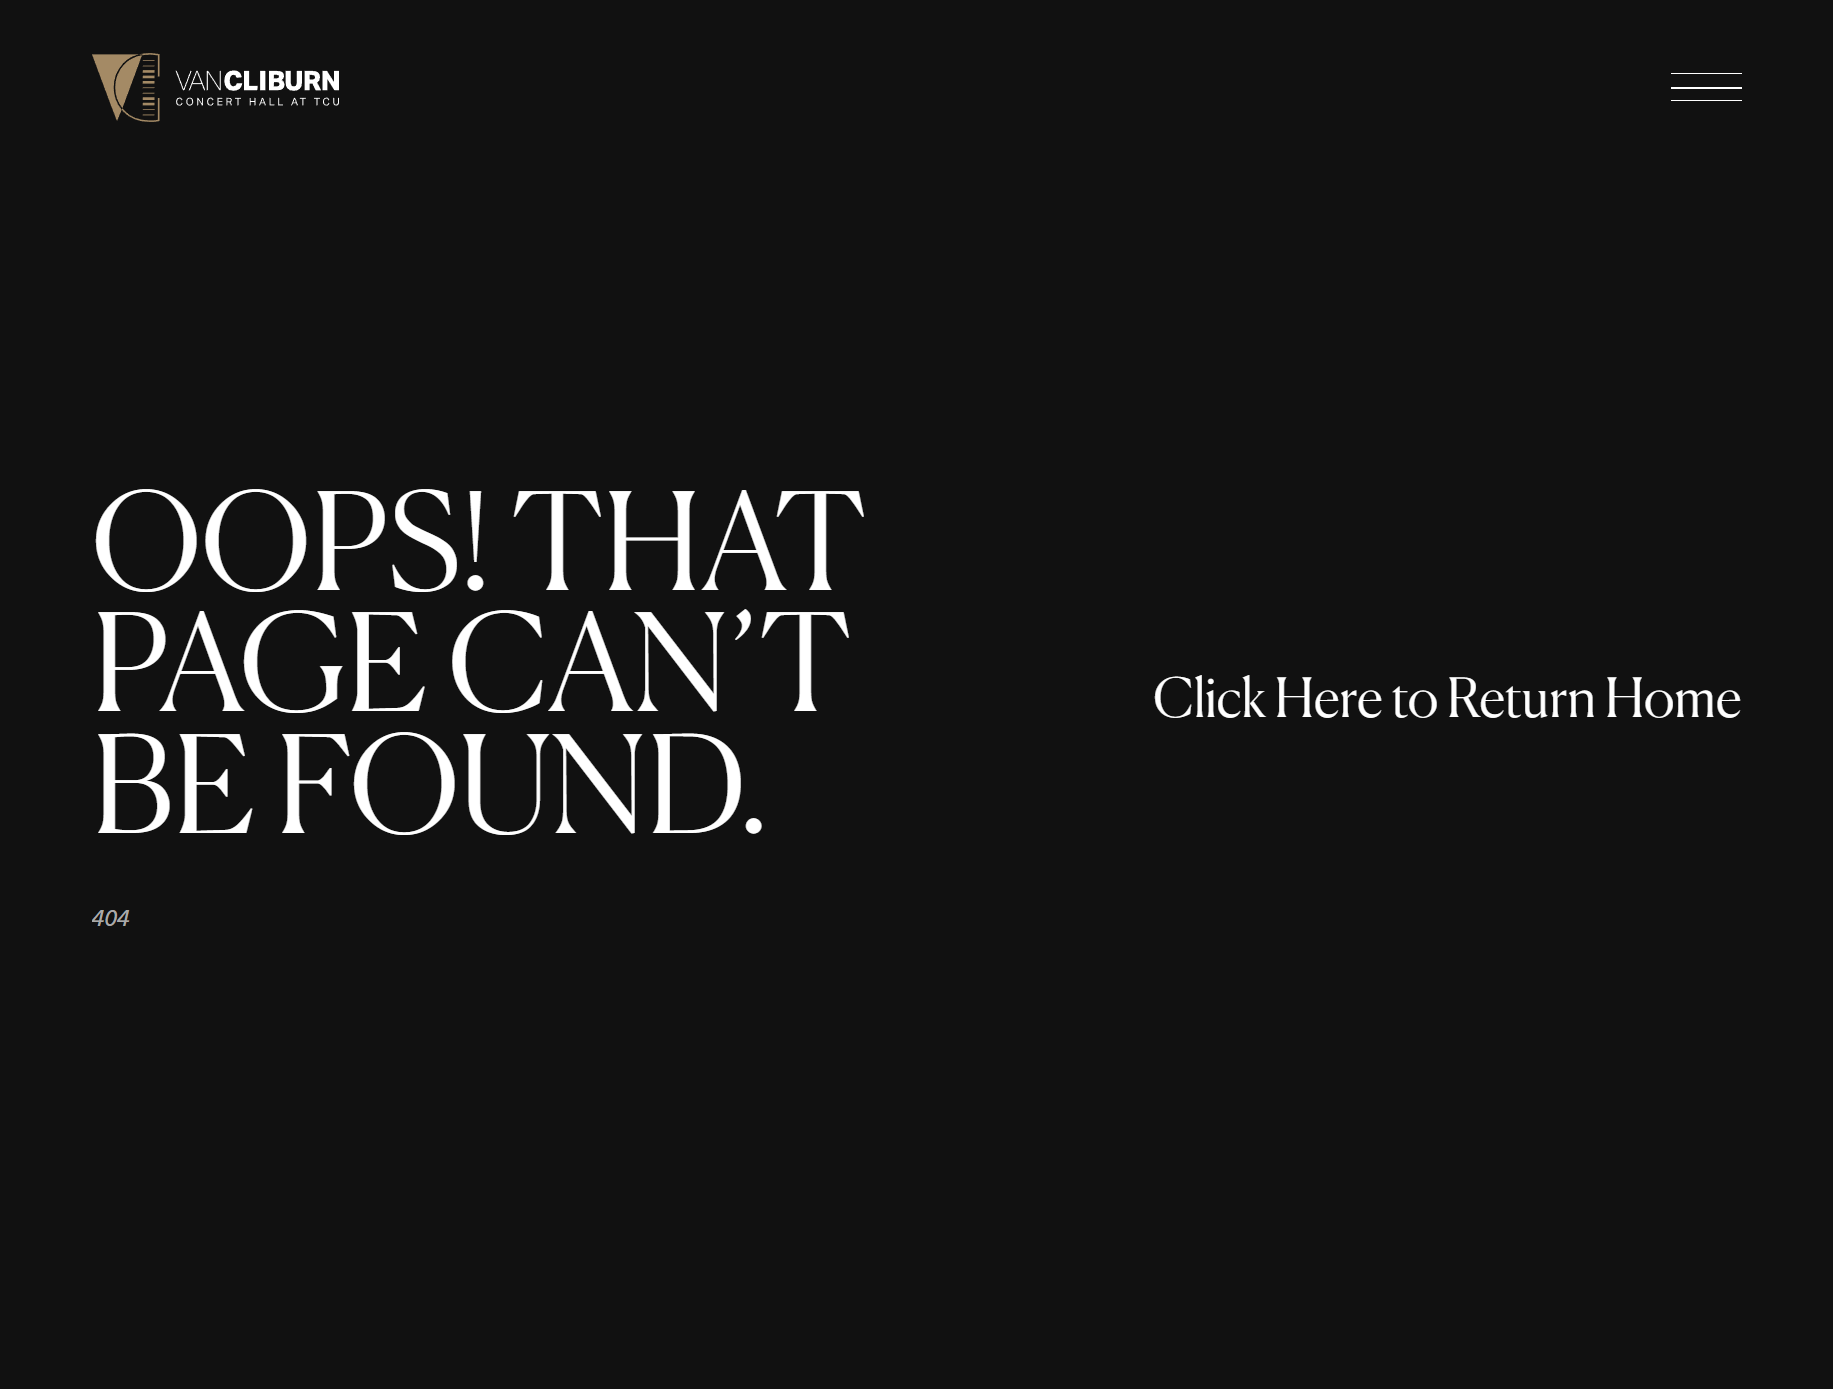 404 - Van Cliburn | Life and Legacy